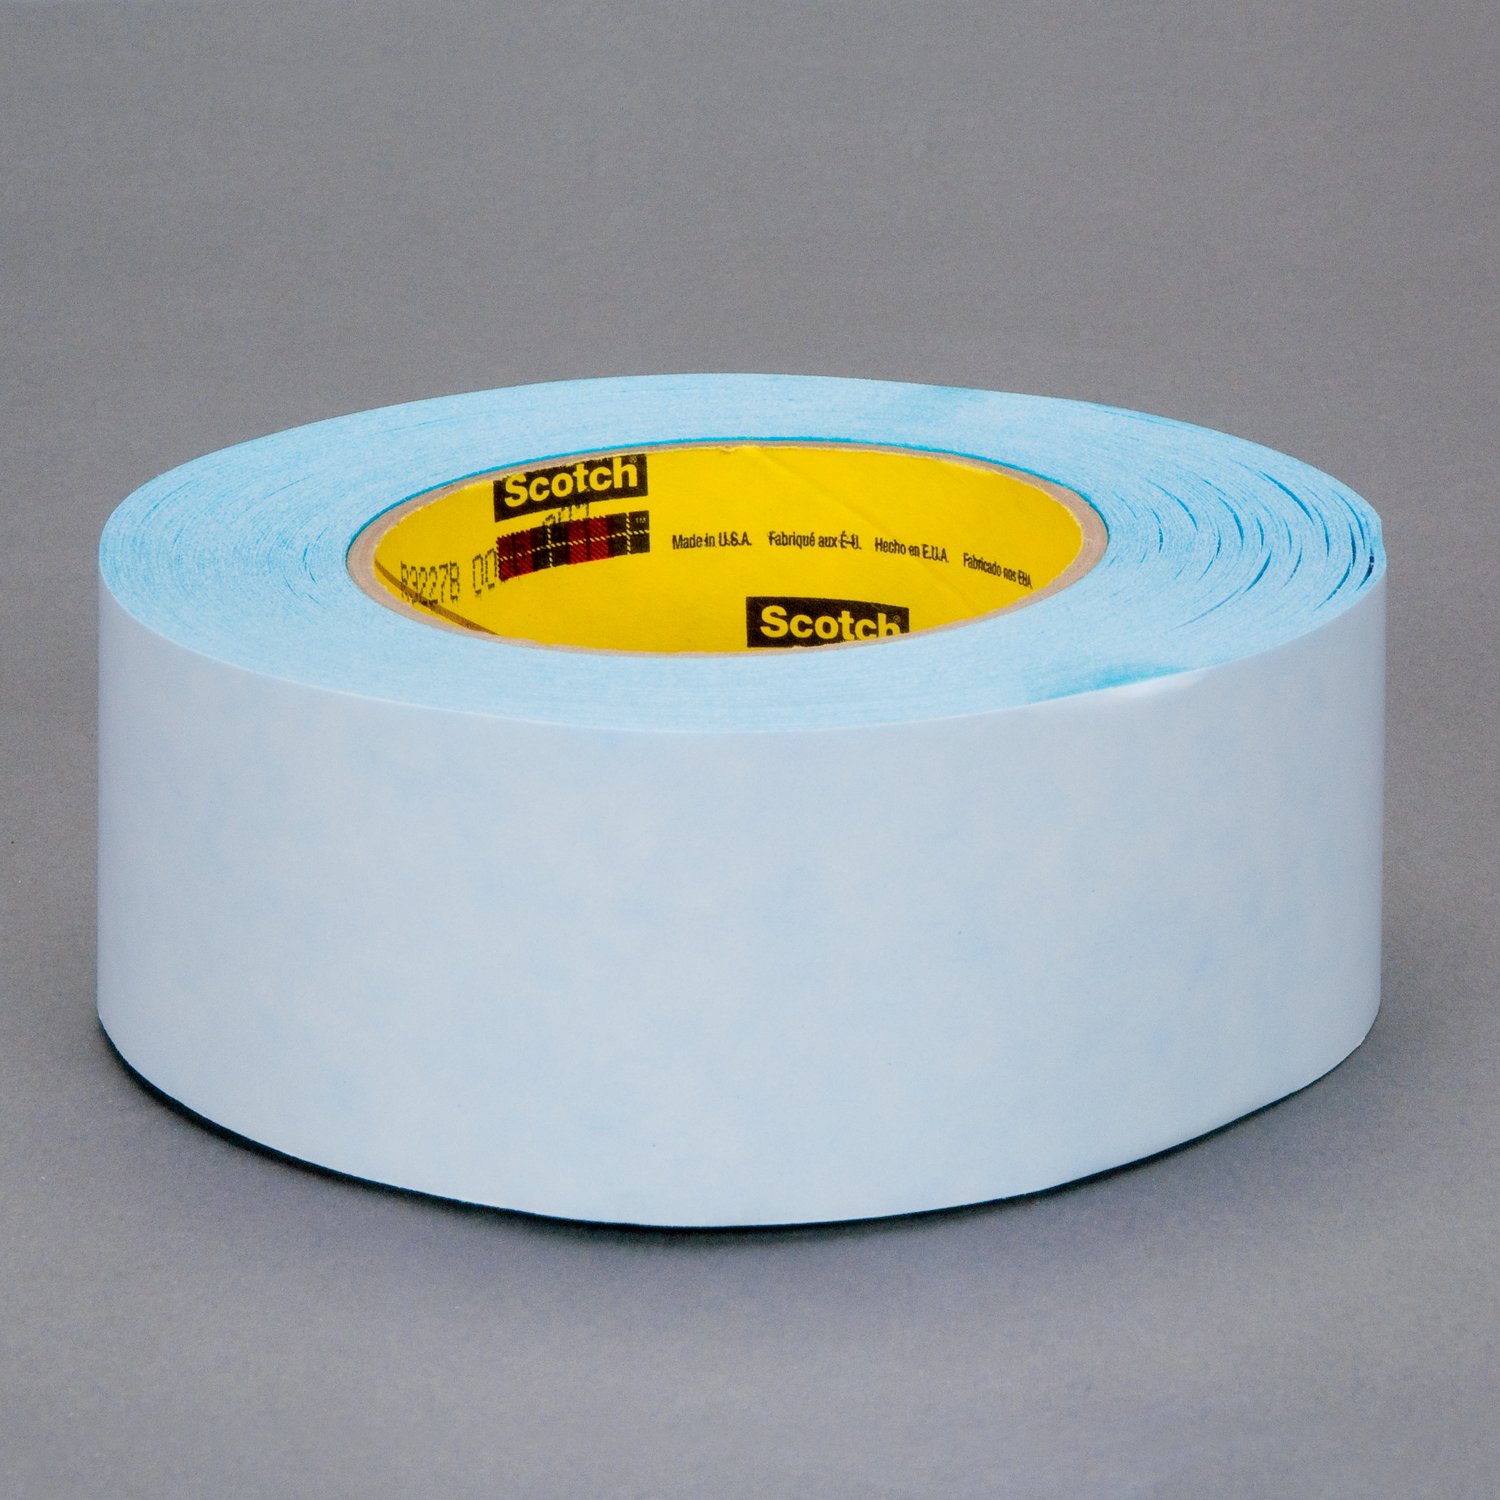 7100028056 - 3M Repulpable Double Coated Tape R3227, Blue, 36 mm x 55 m, 3.5 mil, 24
rolls per case